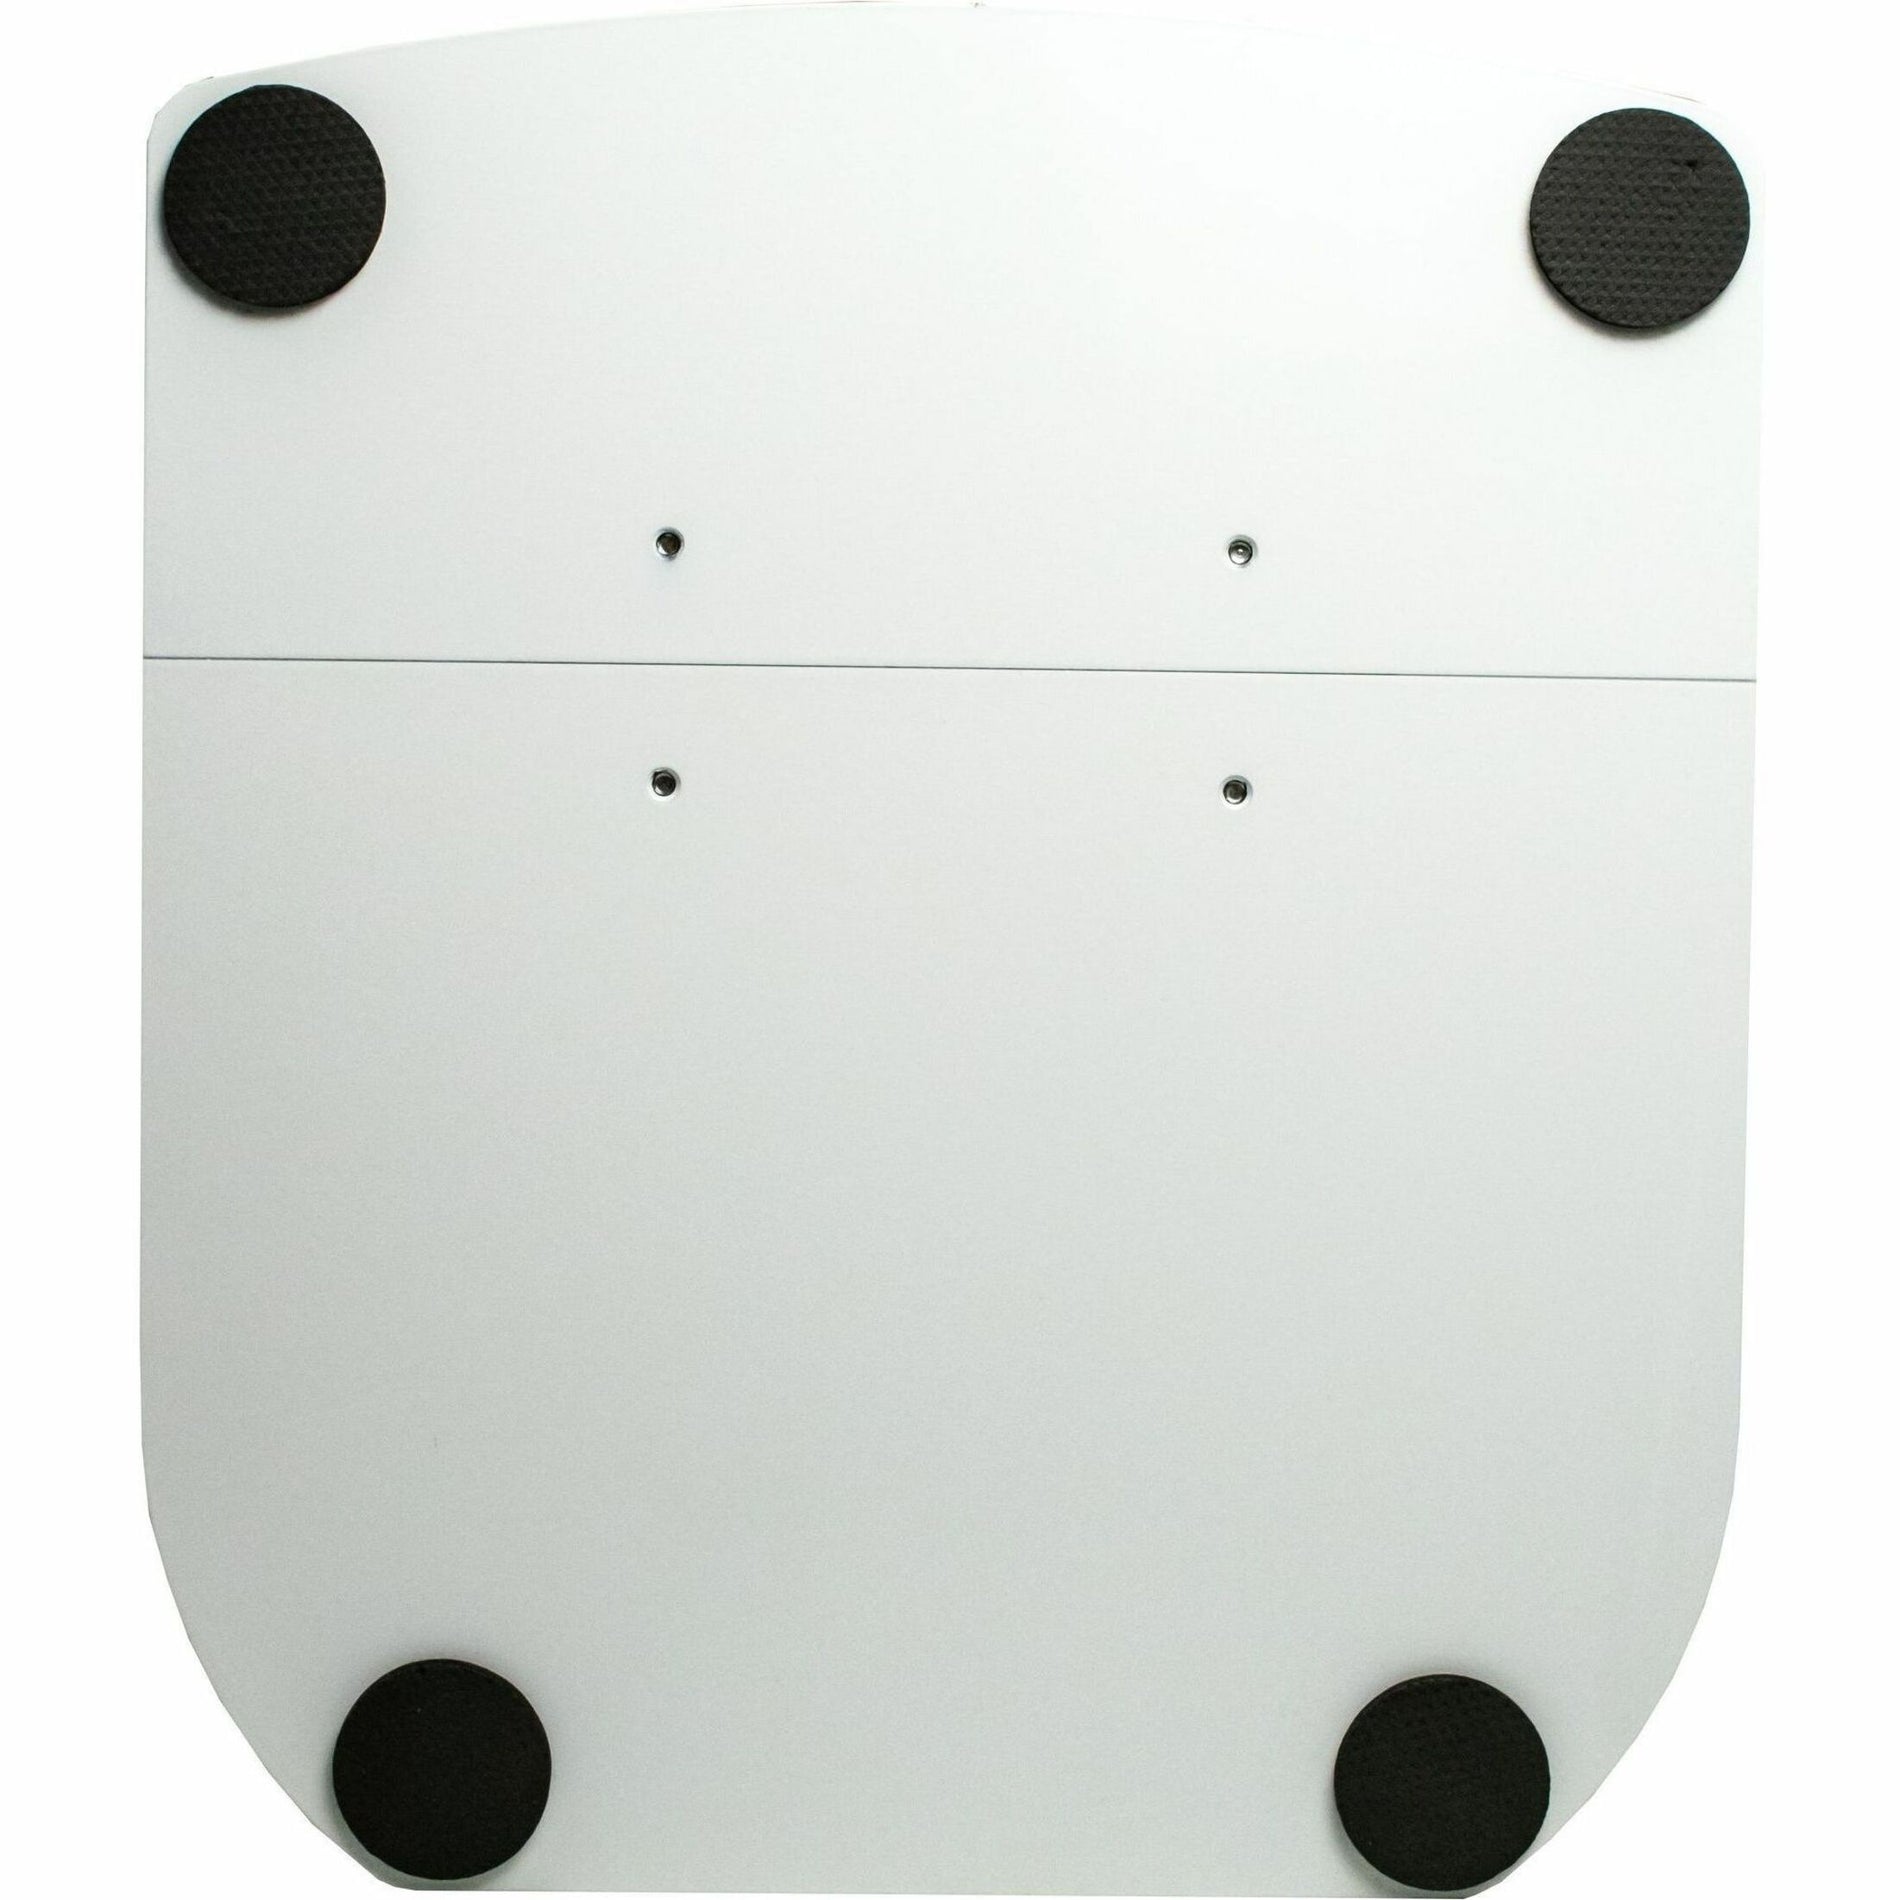 CTA Digital PAD-PLSW Premium Large Locking Floor Stand Kiosk (White), Cable Management, Non-slip, Anti-theft, 360° Rotation